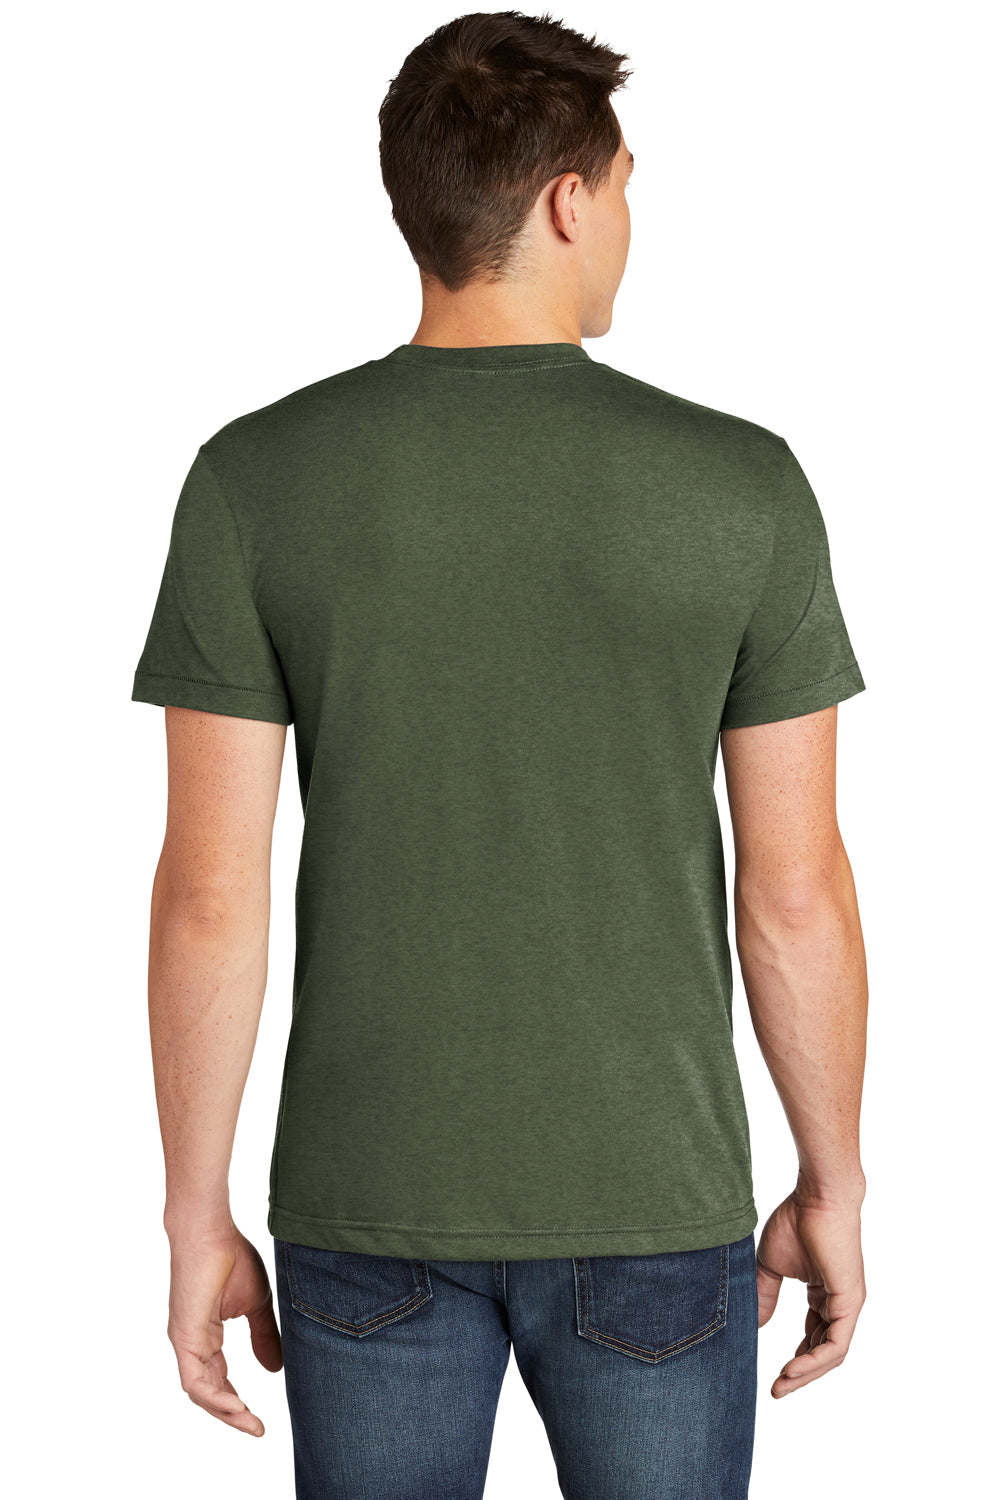 American Apparel BB401W Mens Short Sleeve Crewneck T-Shirt Heather Lieutenant Green Back